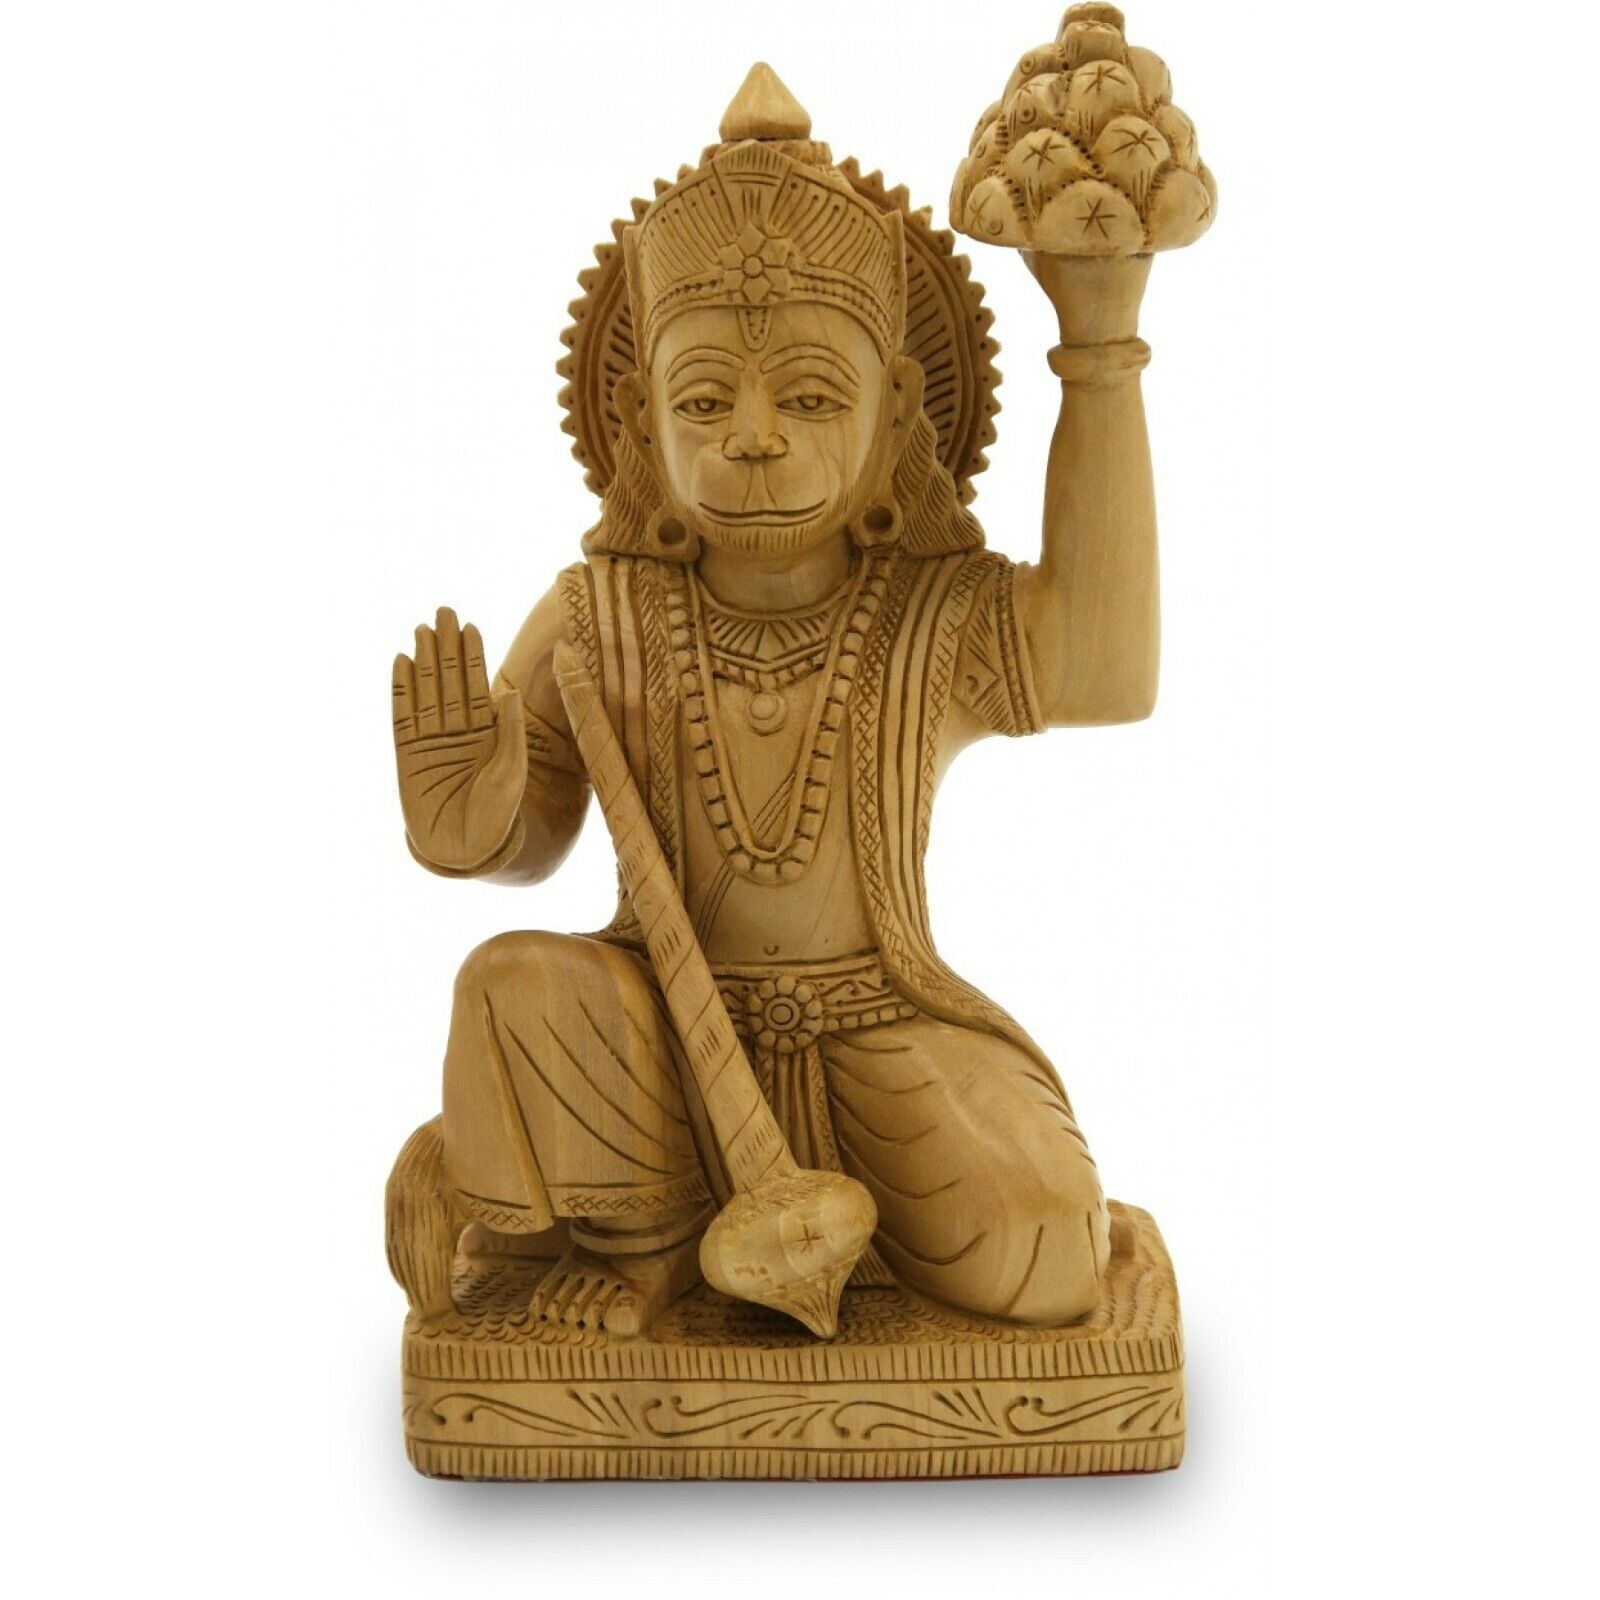 Beautiful Handcrafted Wooden Lord Hanuman Ji Statue / Idol From India (DP1)